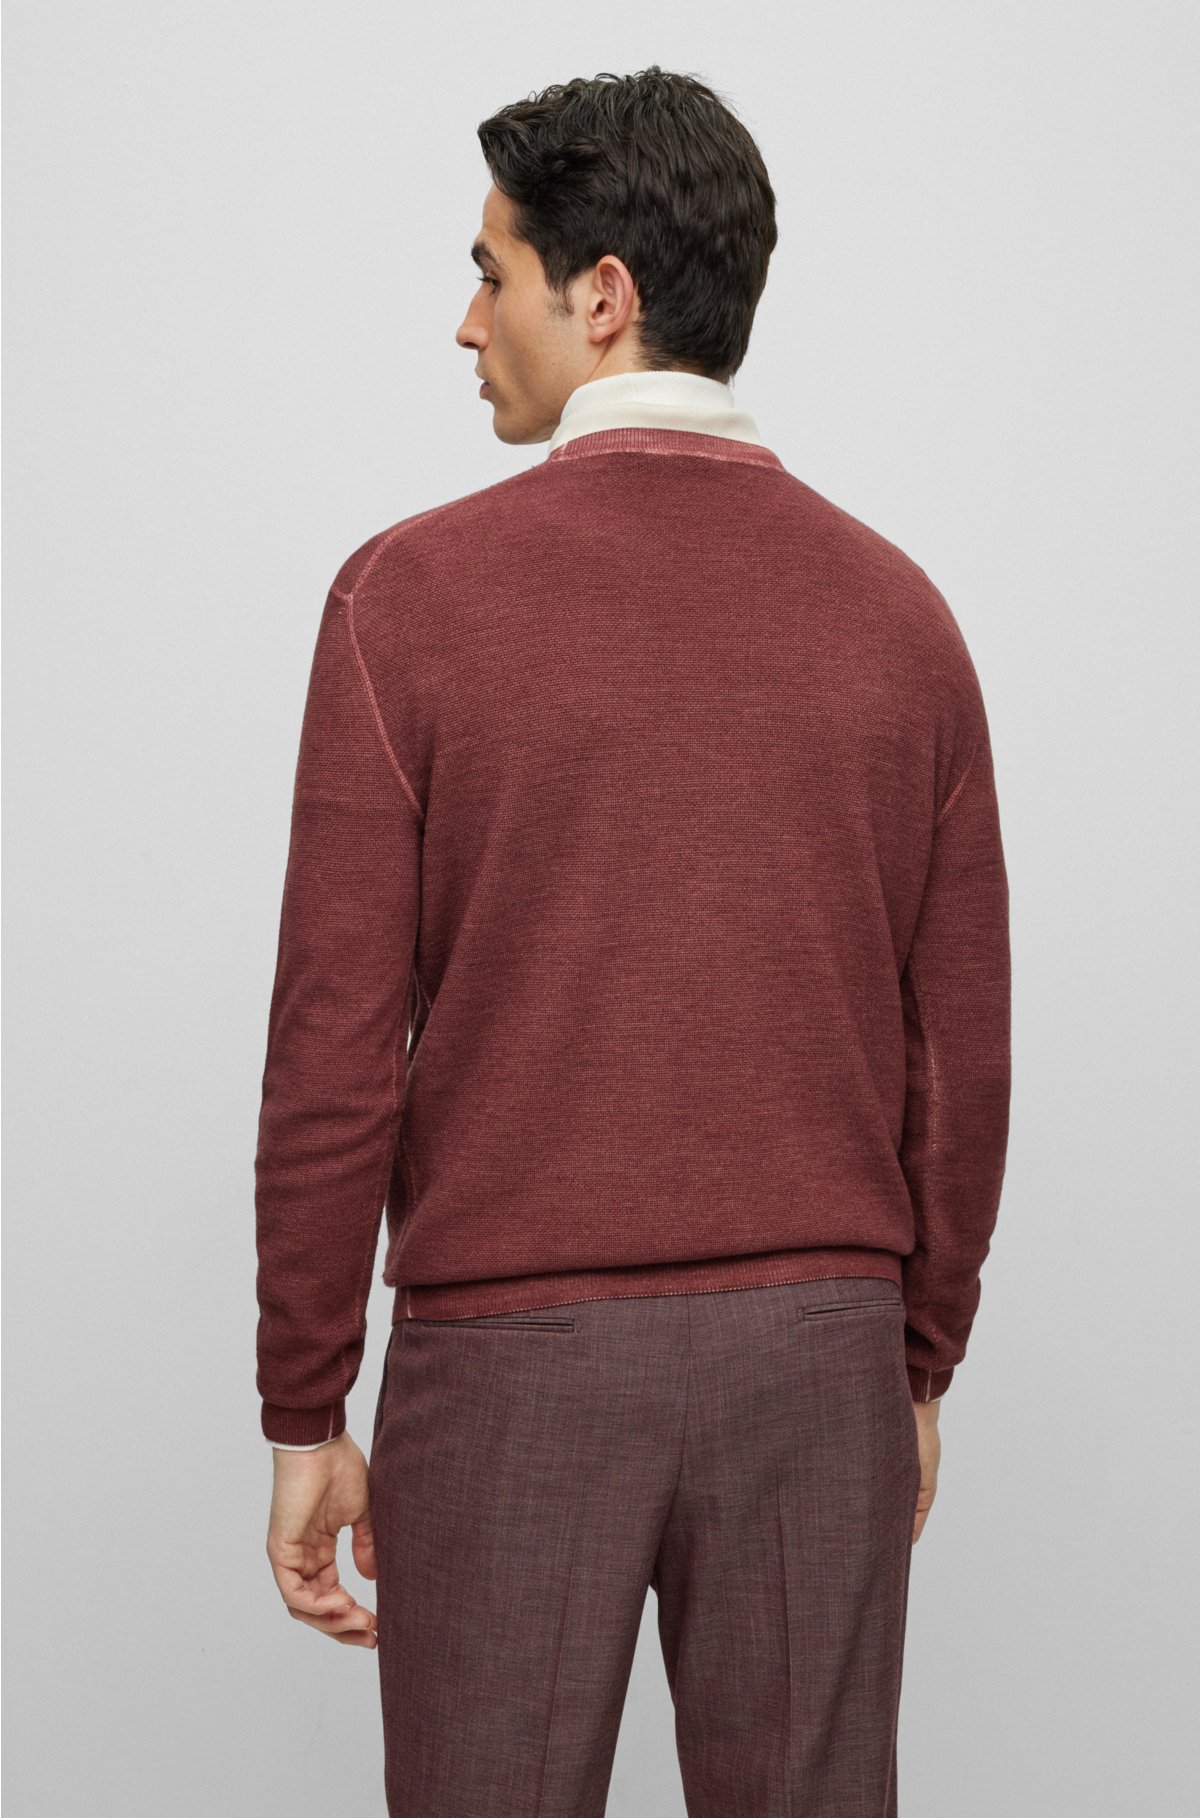 Structured-knit sweater in virgin wool, silk and cashmere, Dark Red